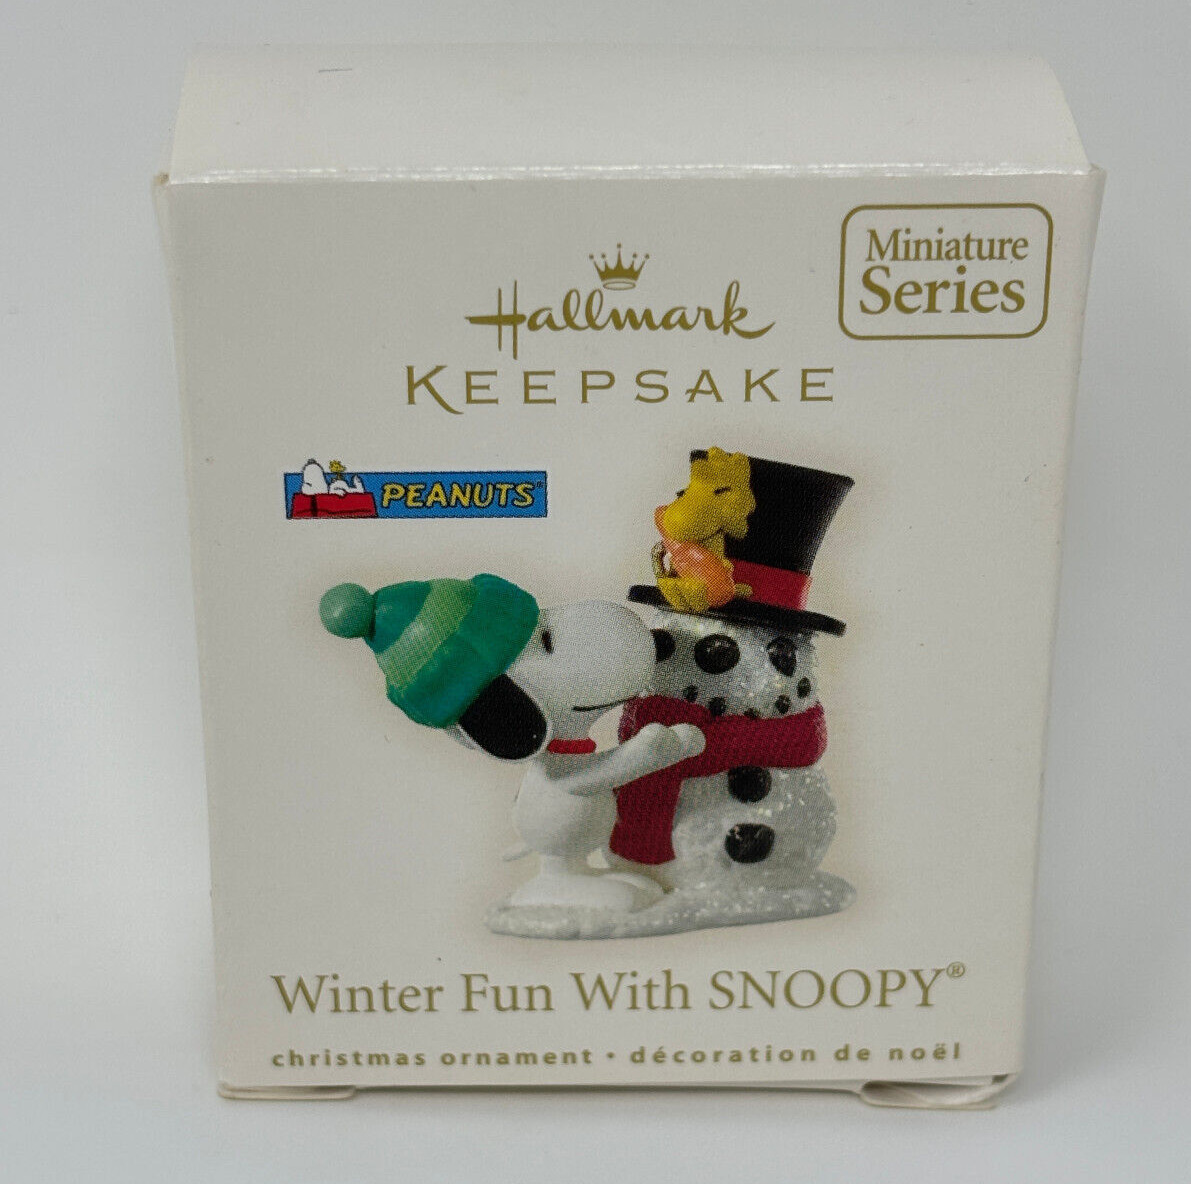 Hallmark Keepsake Peanuts Christmas Ornament Miniature Series Winter Fun Snoopy